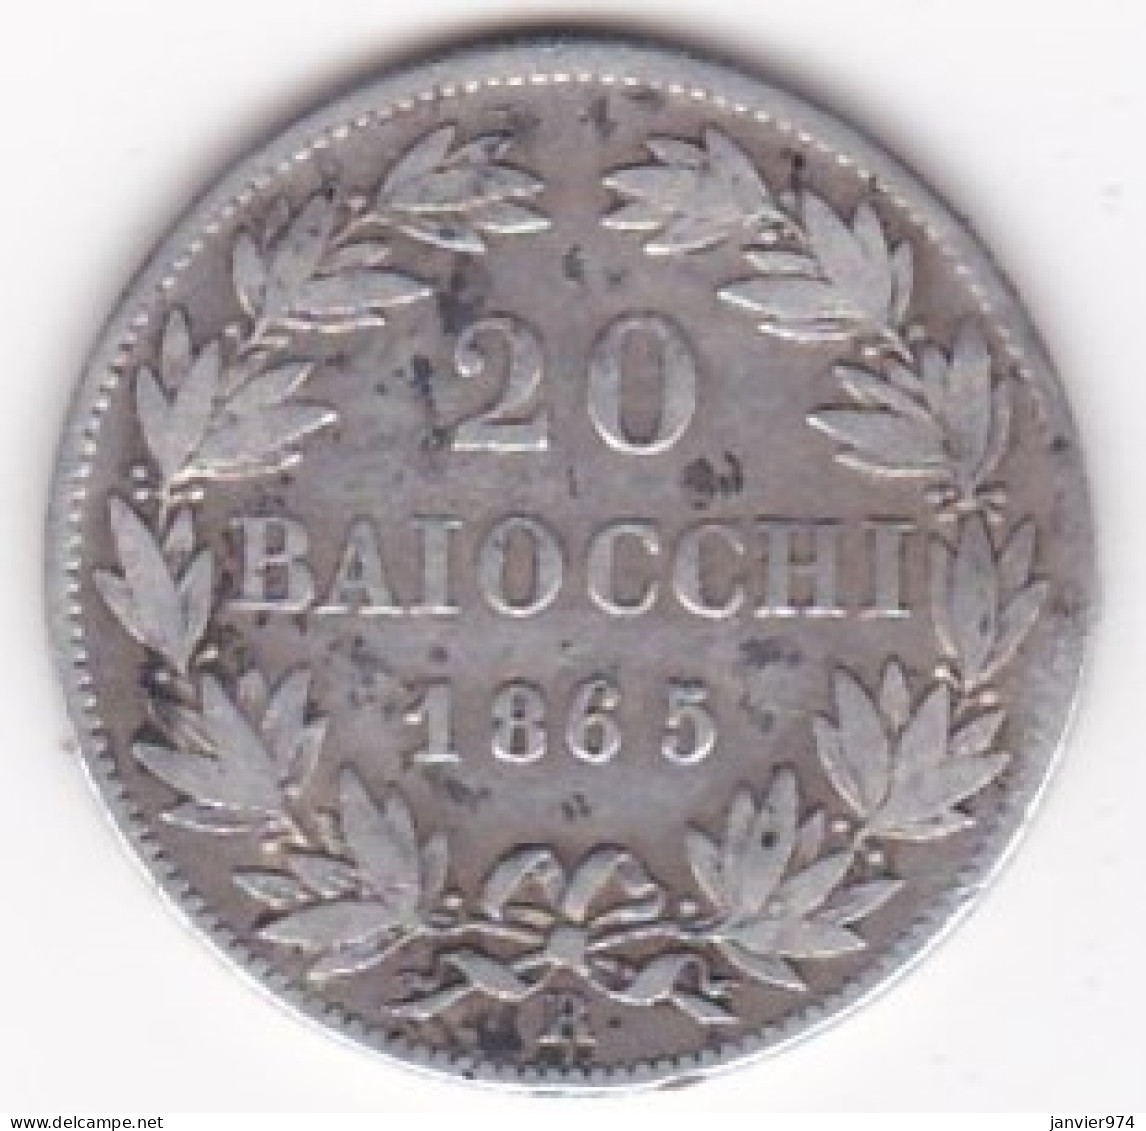 20 Baiocchi 1865 An. XX, Zecca Di Roma, Pie IX / Pio IX , Argent - Vatikan